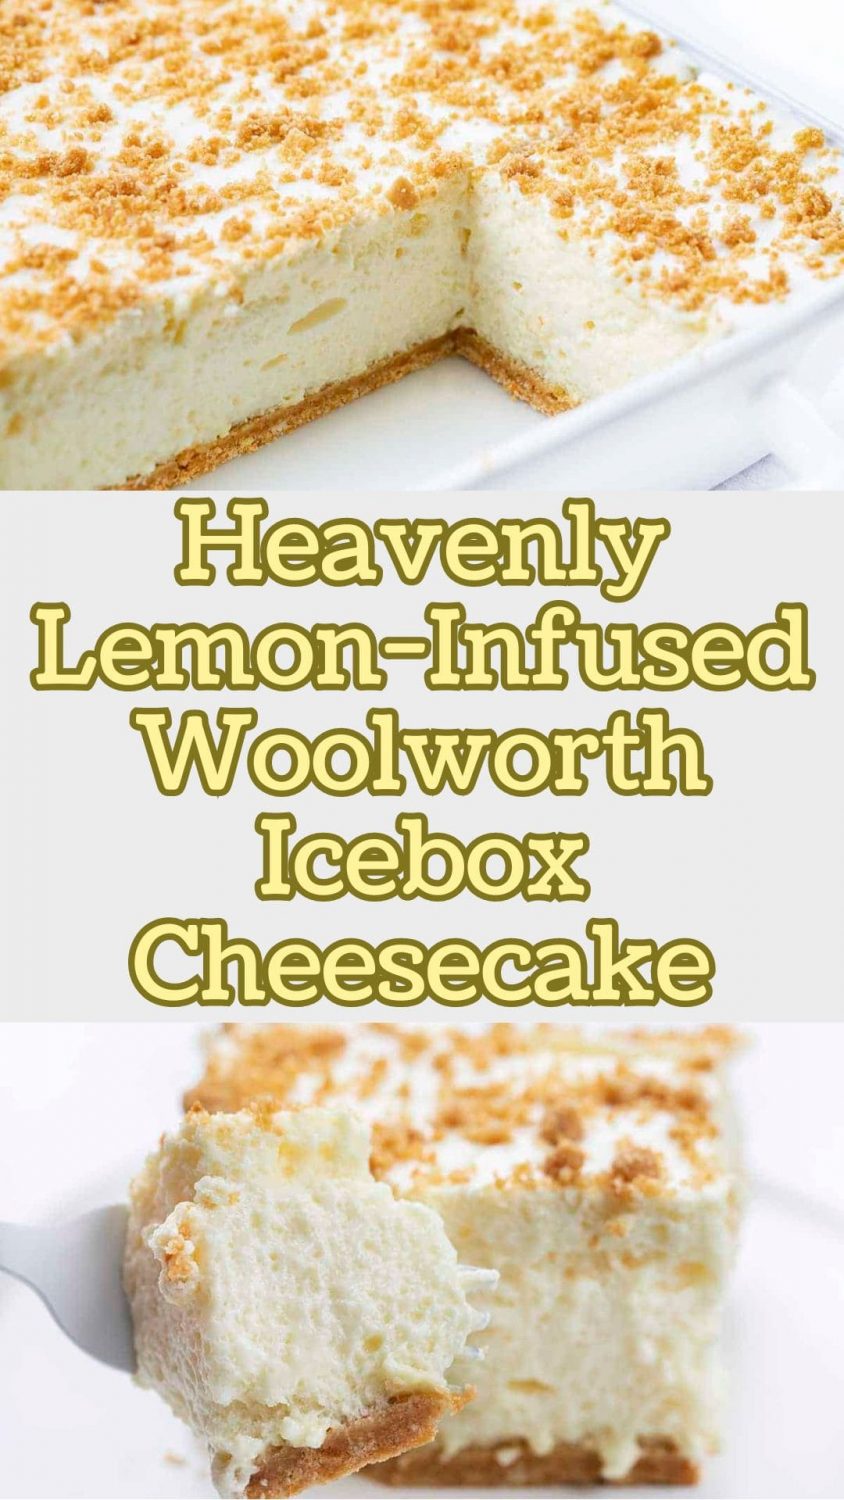 Heavenly Lemon-Infused Woolworth Icebox Cheesecake